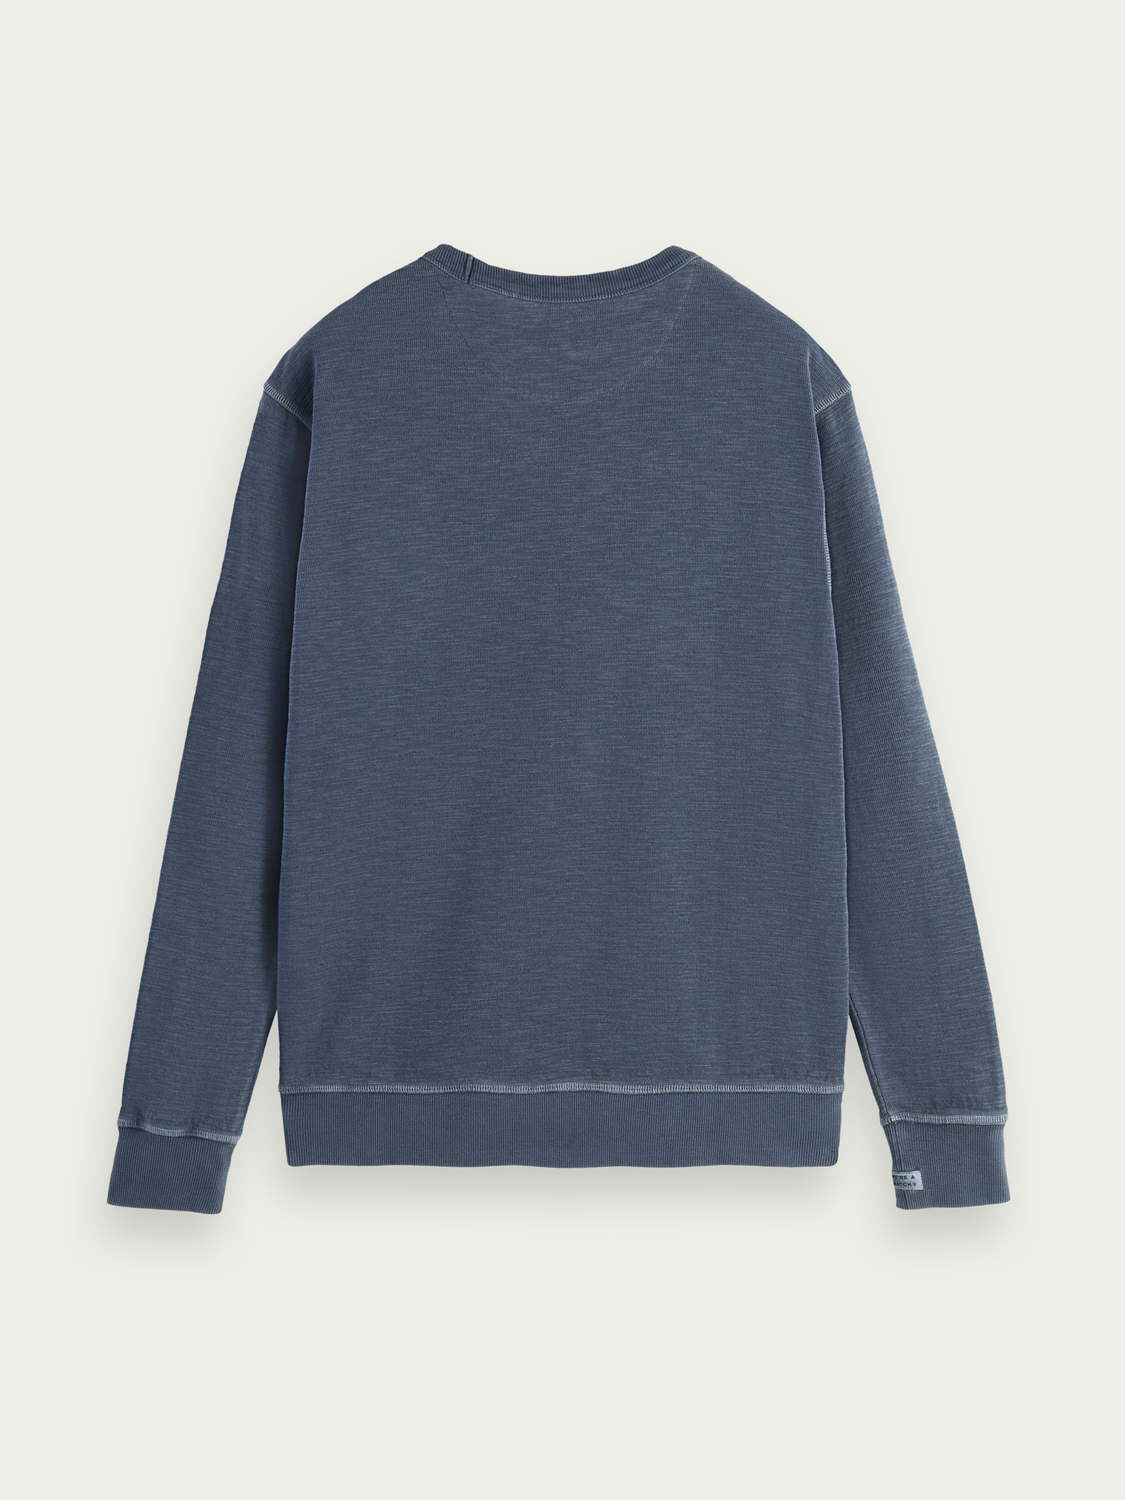 Scotch & Soda - Structured Garment-Dyed Sweatshirt - Night